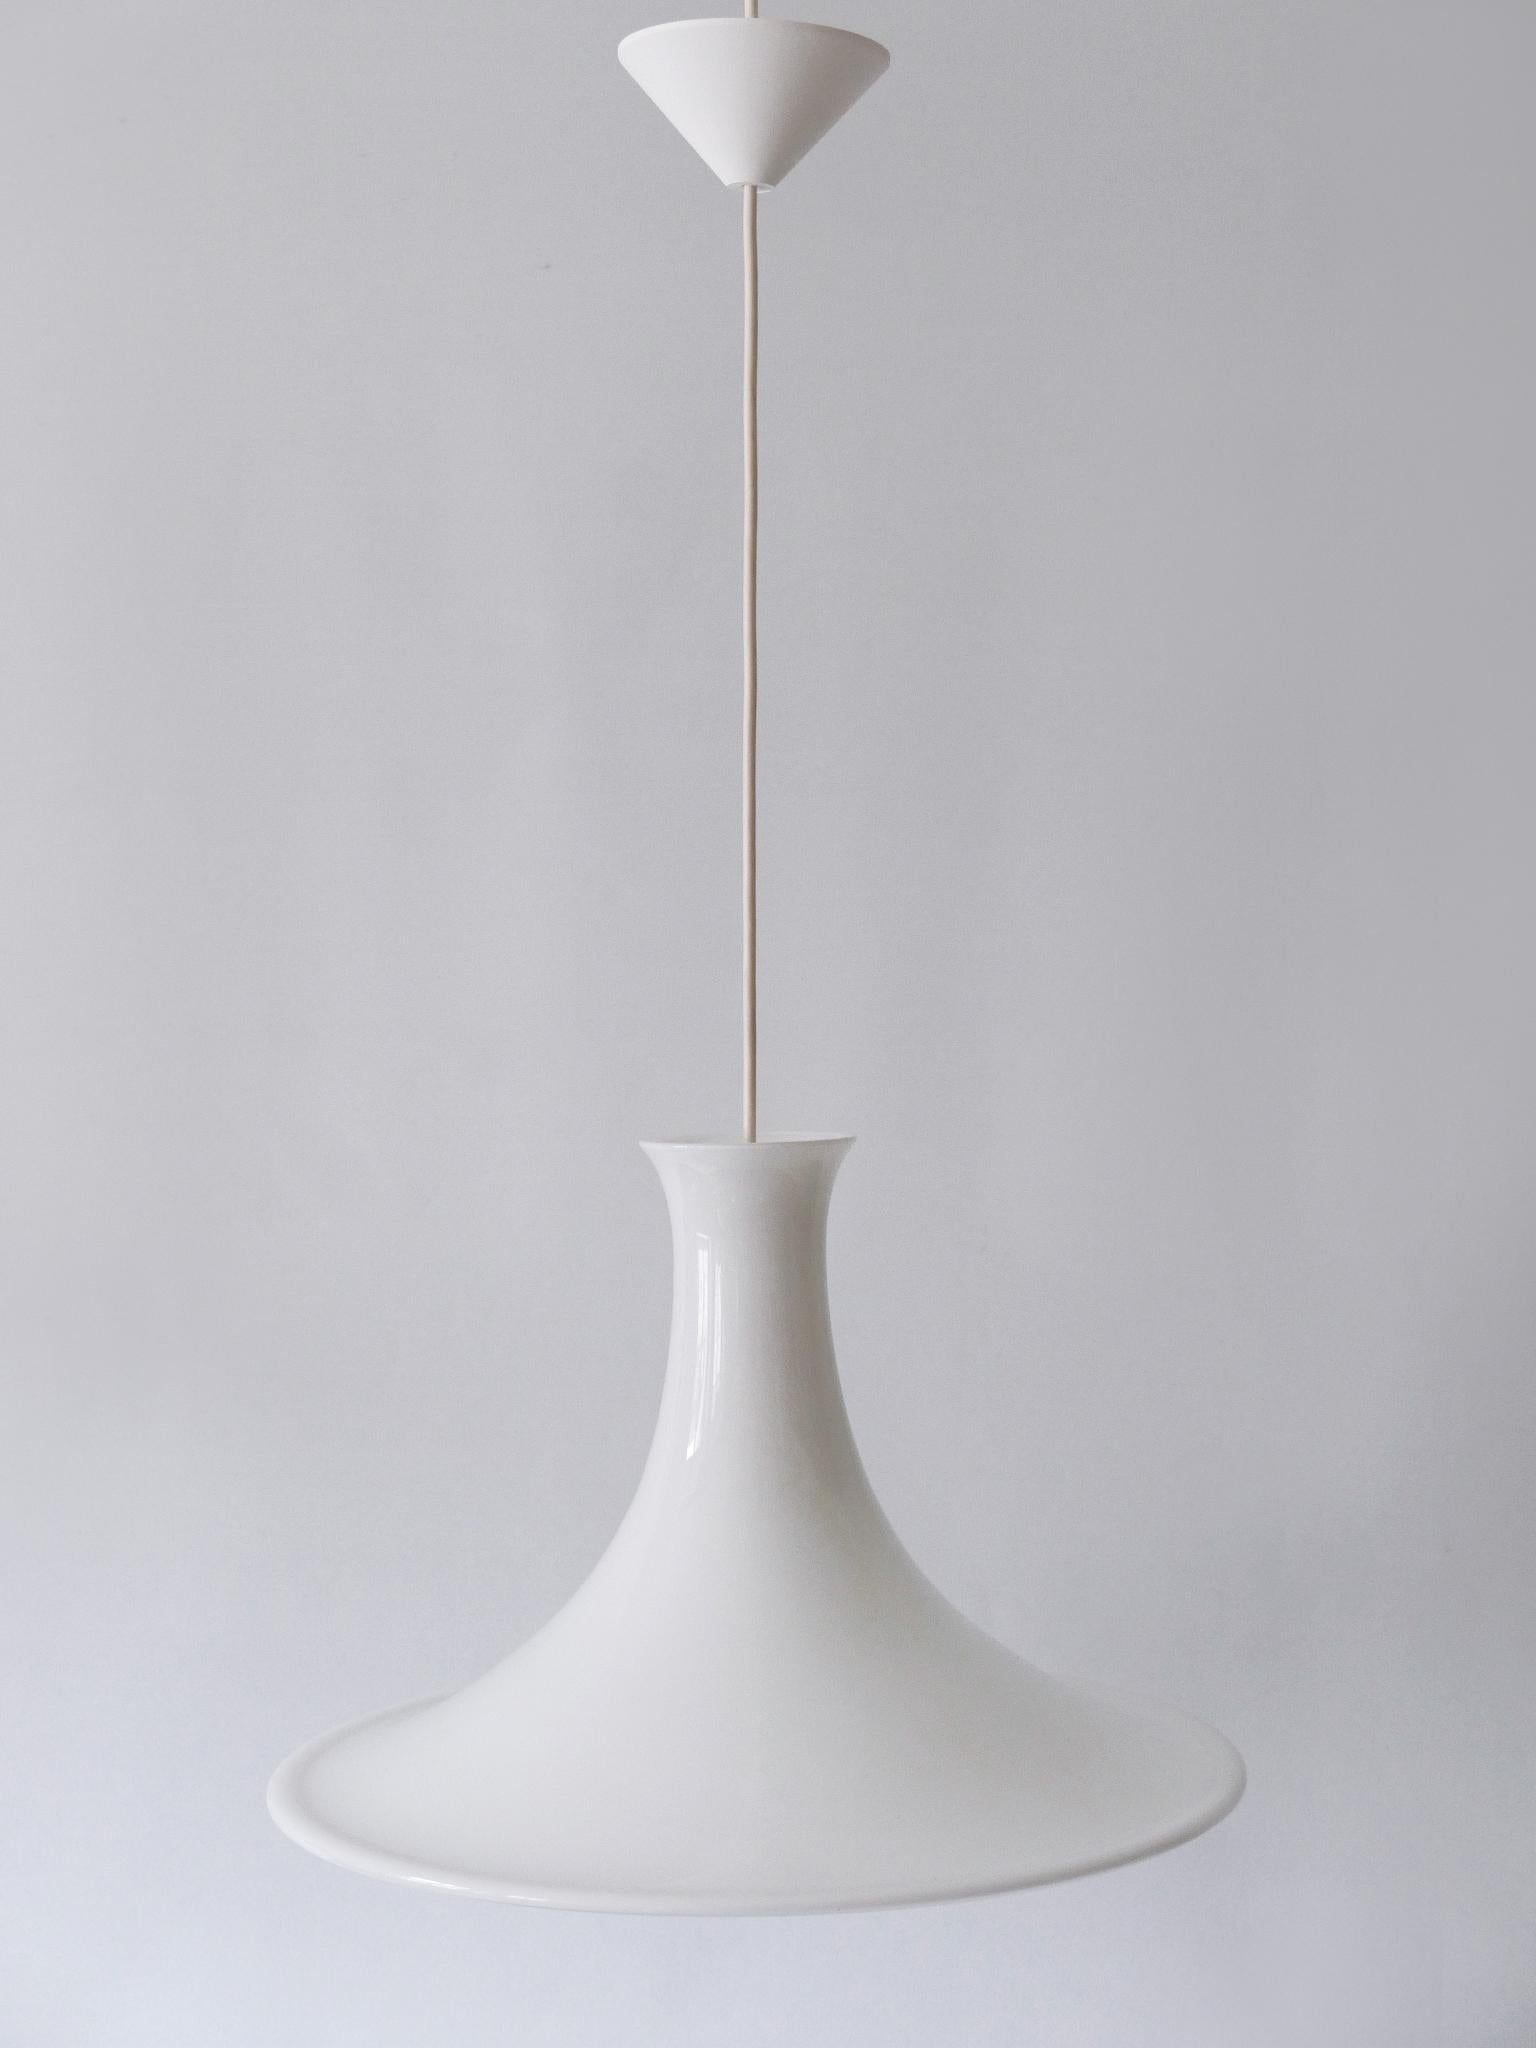 Mandarin Pendant Lamp by Michael Bang Für Holmegaard/Royal Copenhagen 1980s For Sale 8